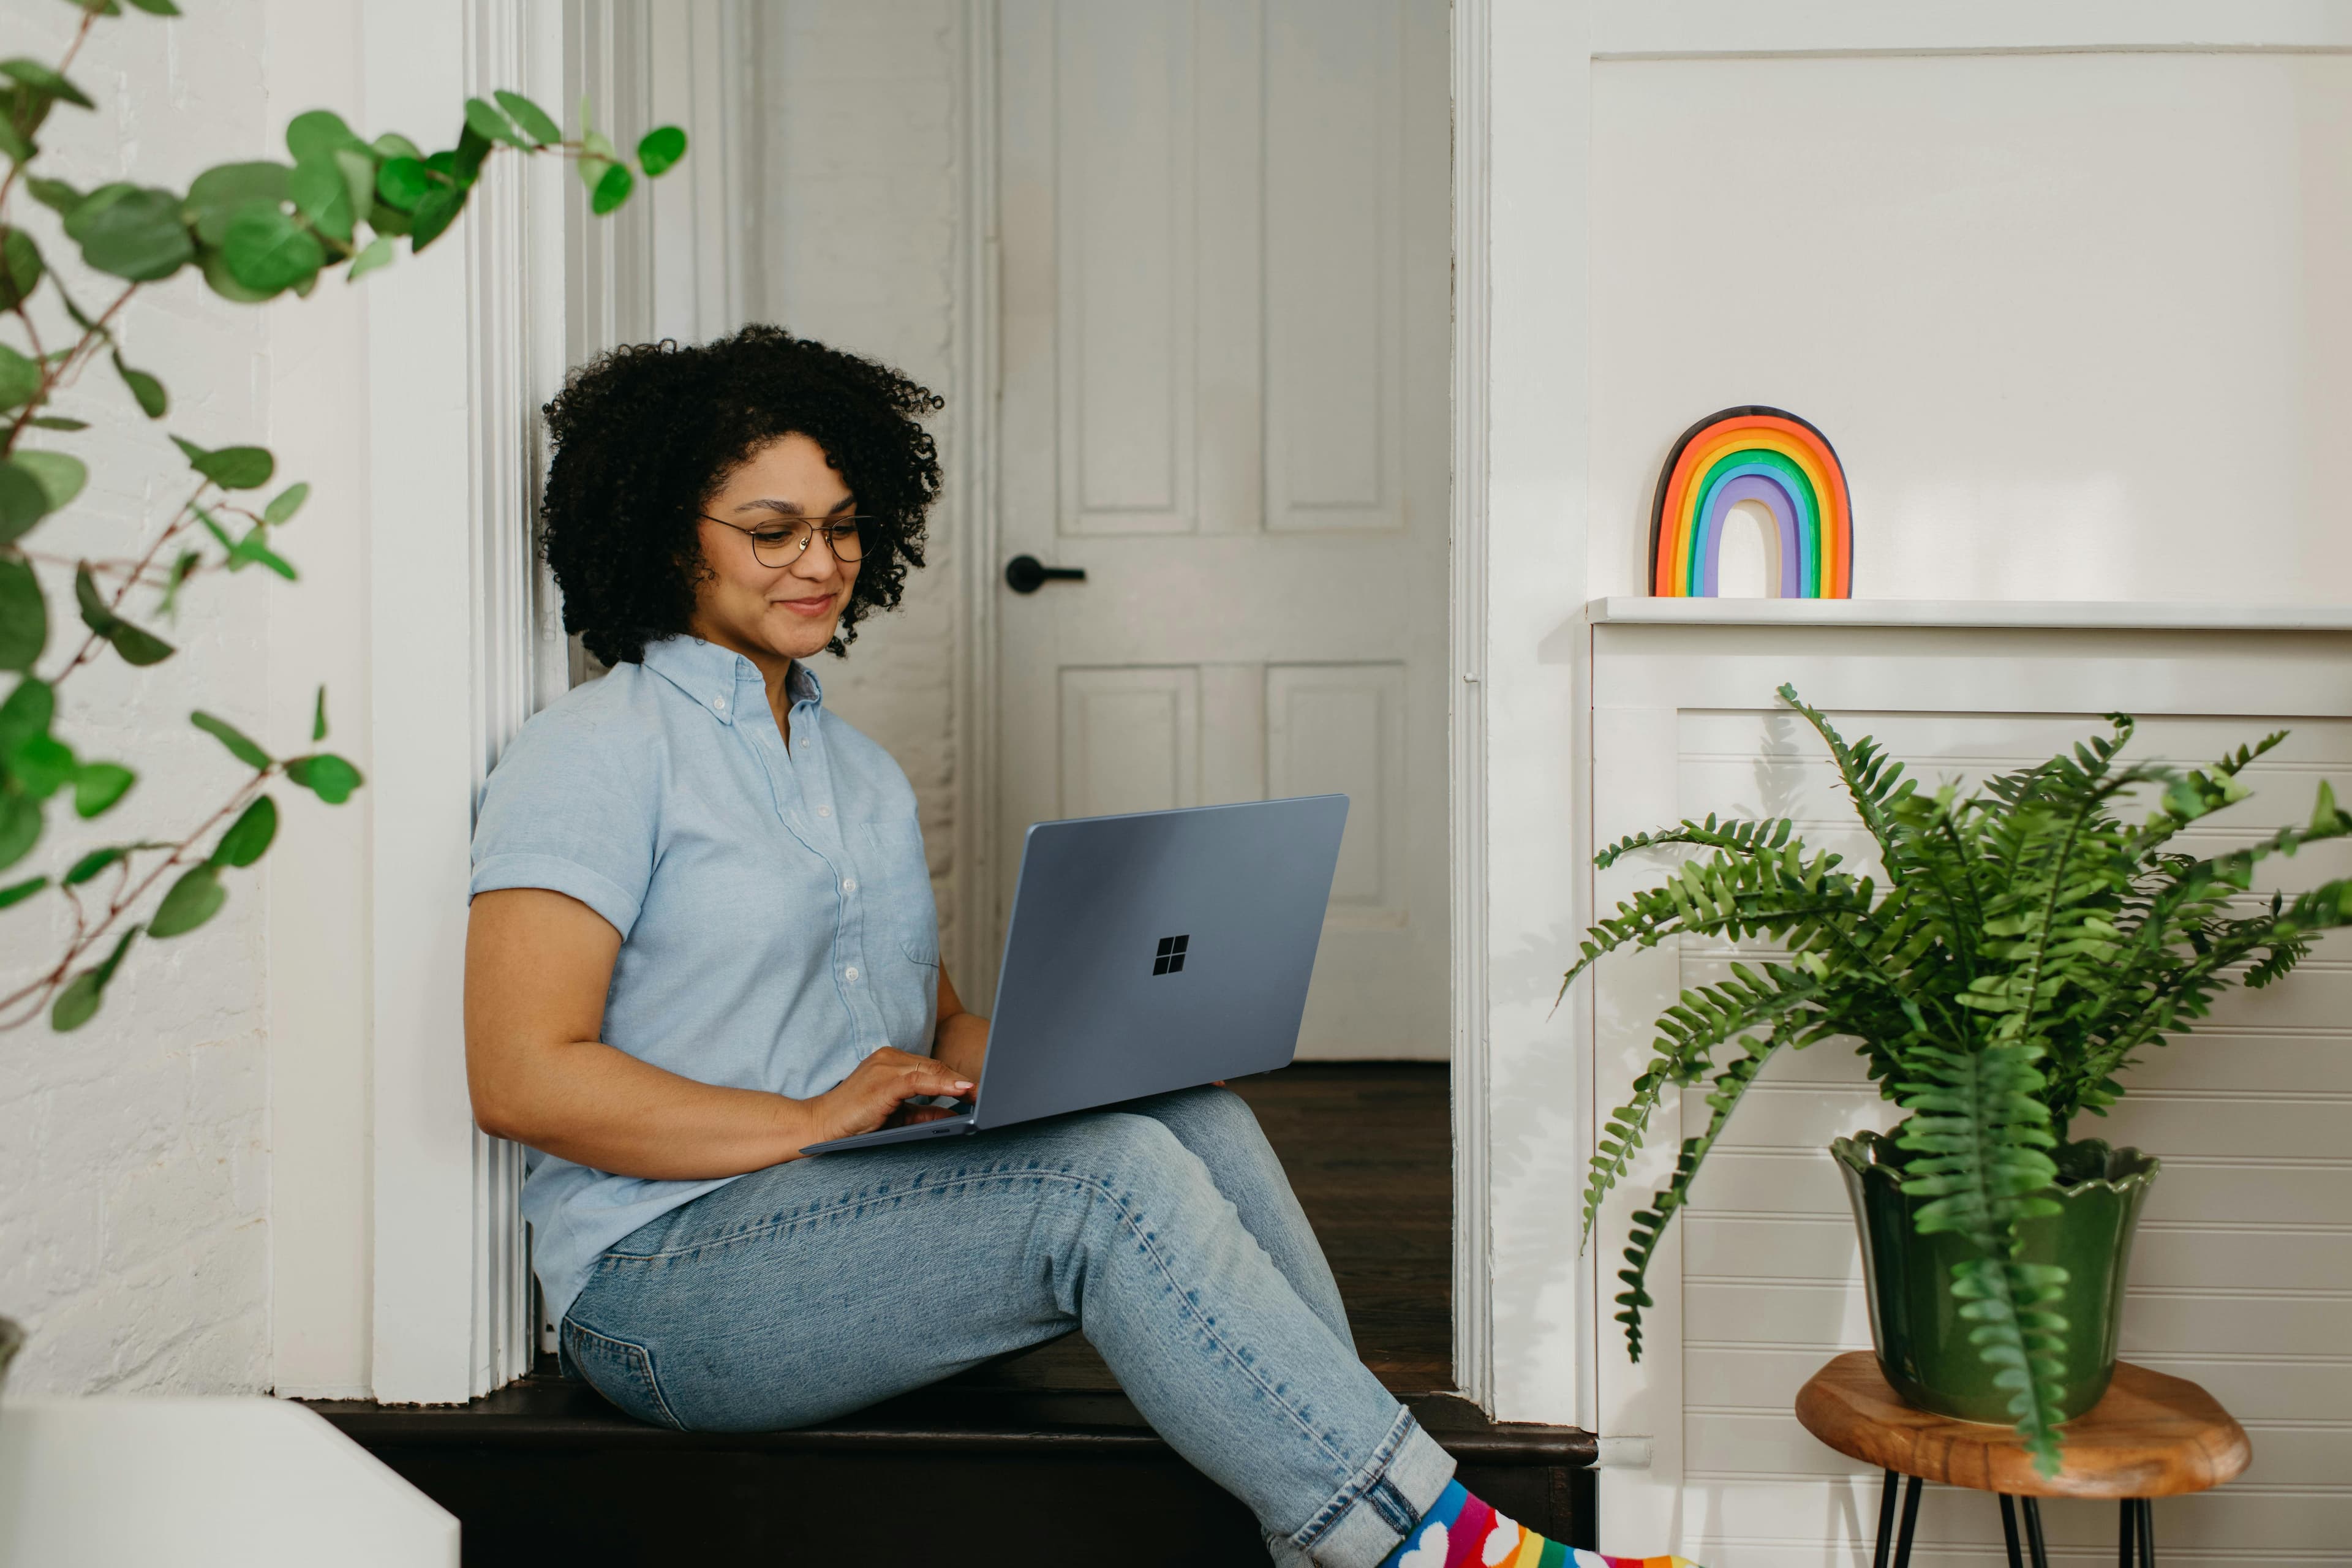 Freelancer on laptop next to rainbow drawing